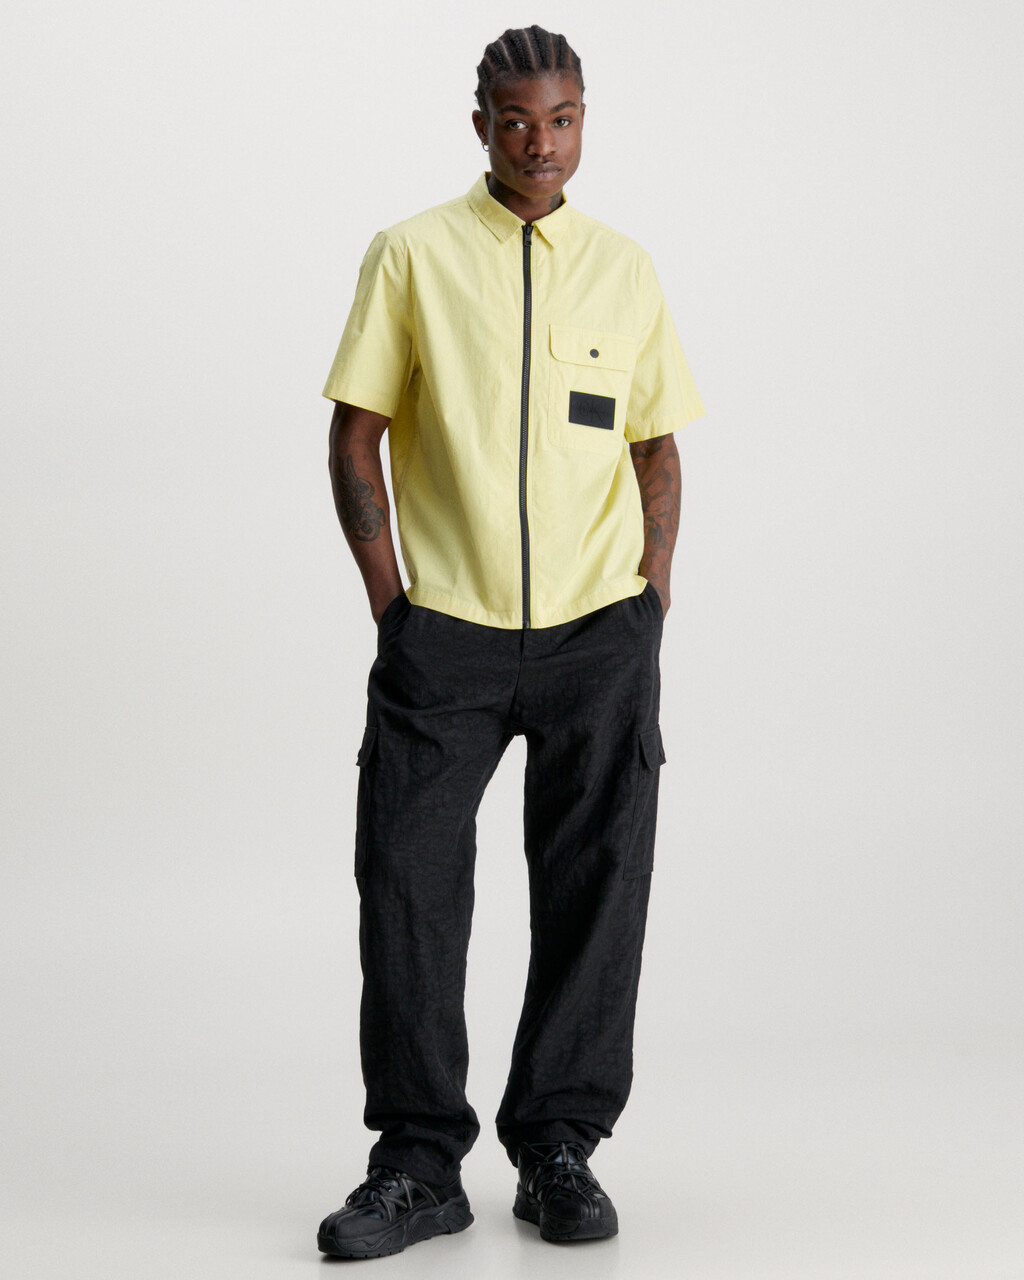 Short Sleeve Zip Up Shirt, Yellow Sand, hi-res